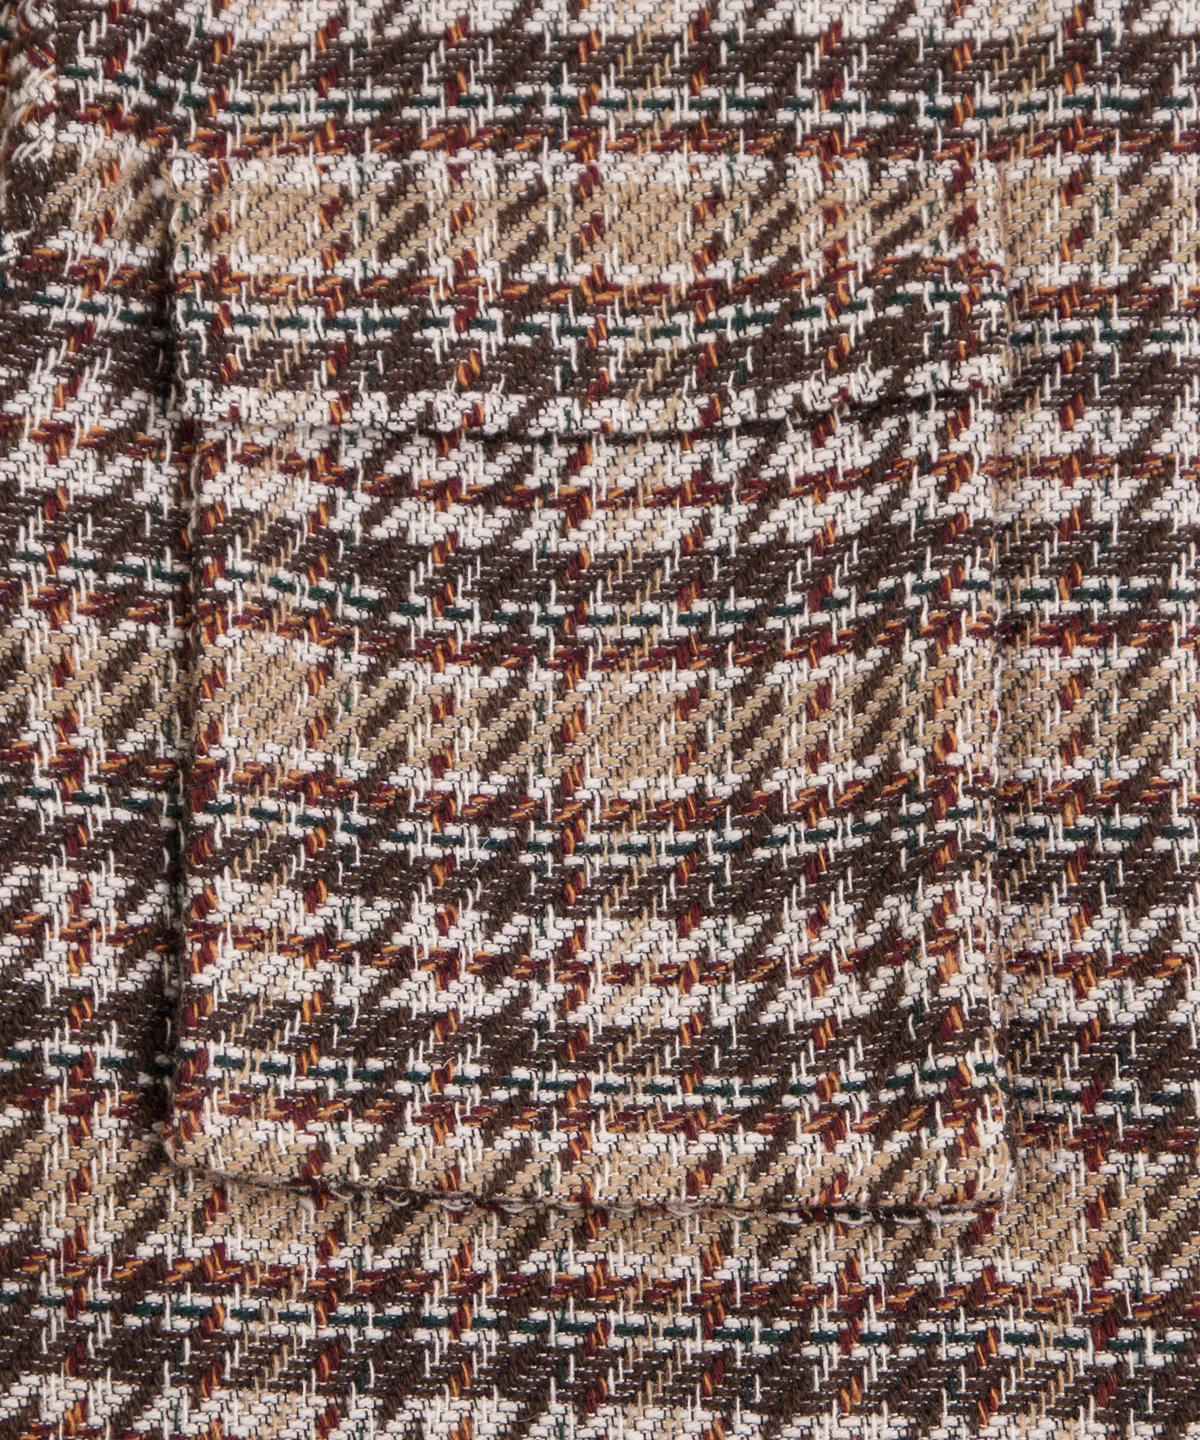 grindlondon wool checked overshirt